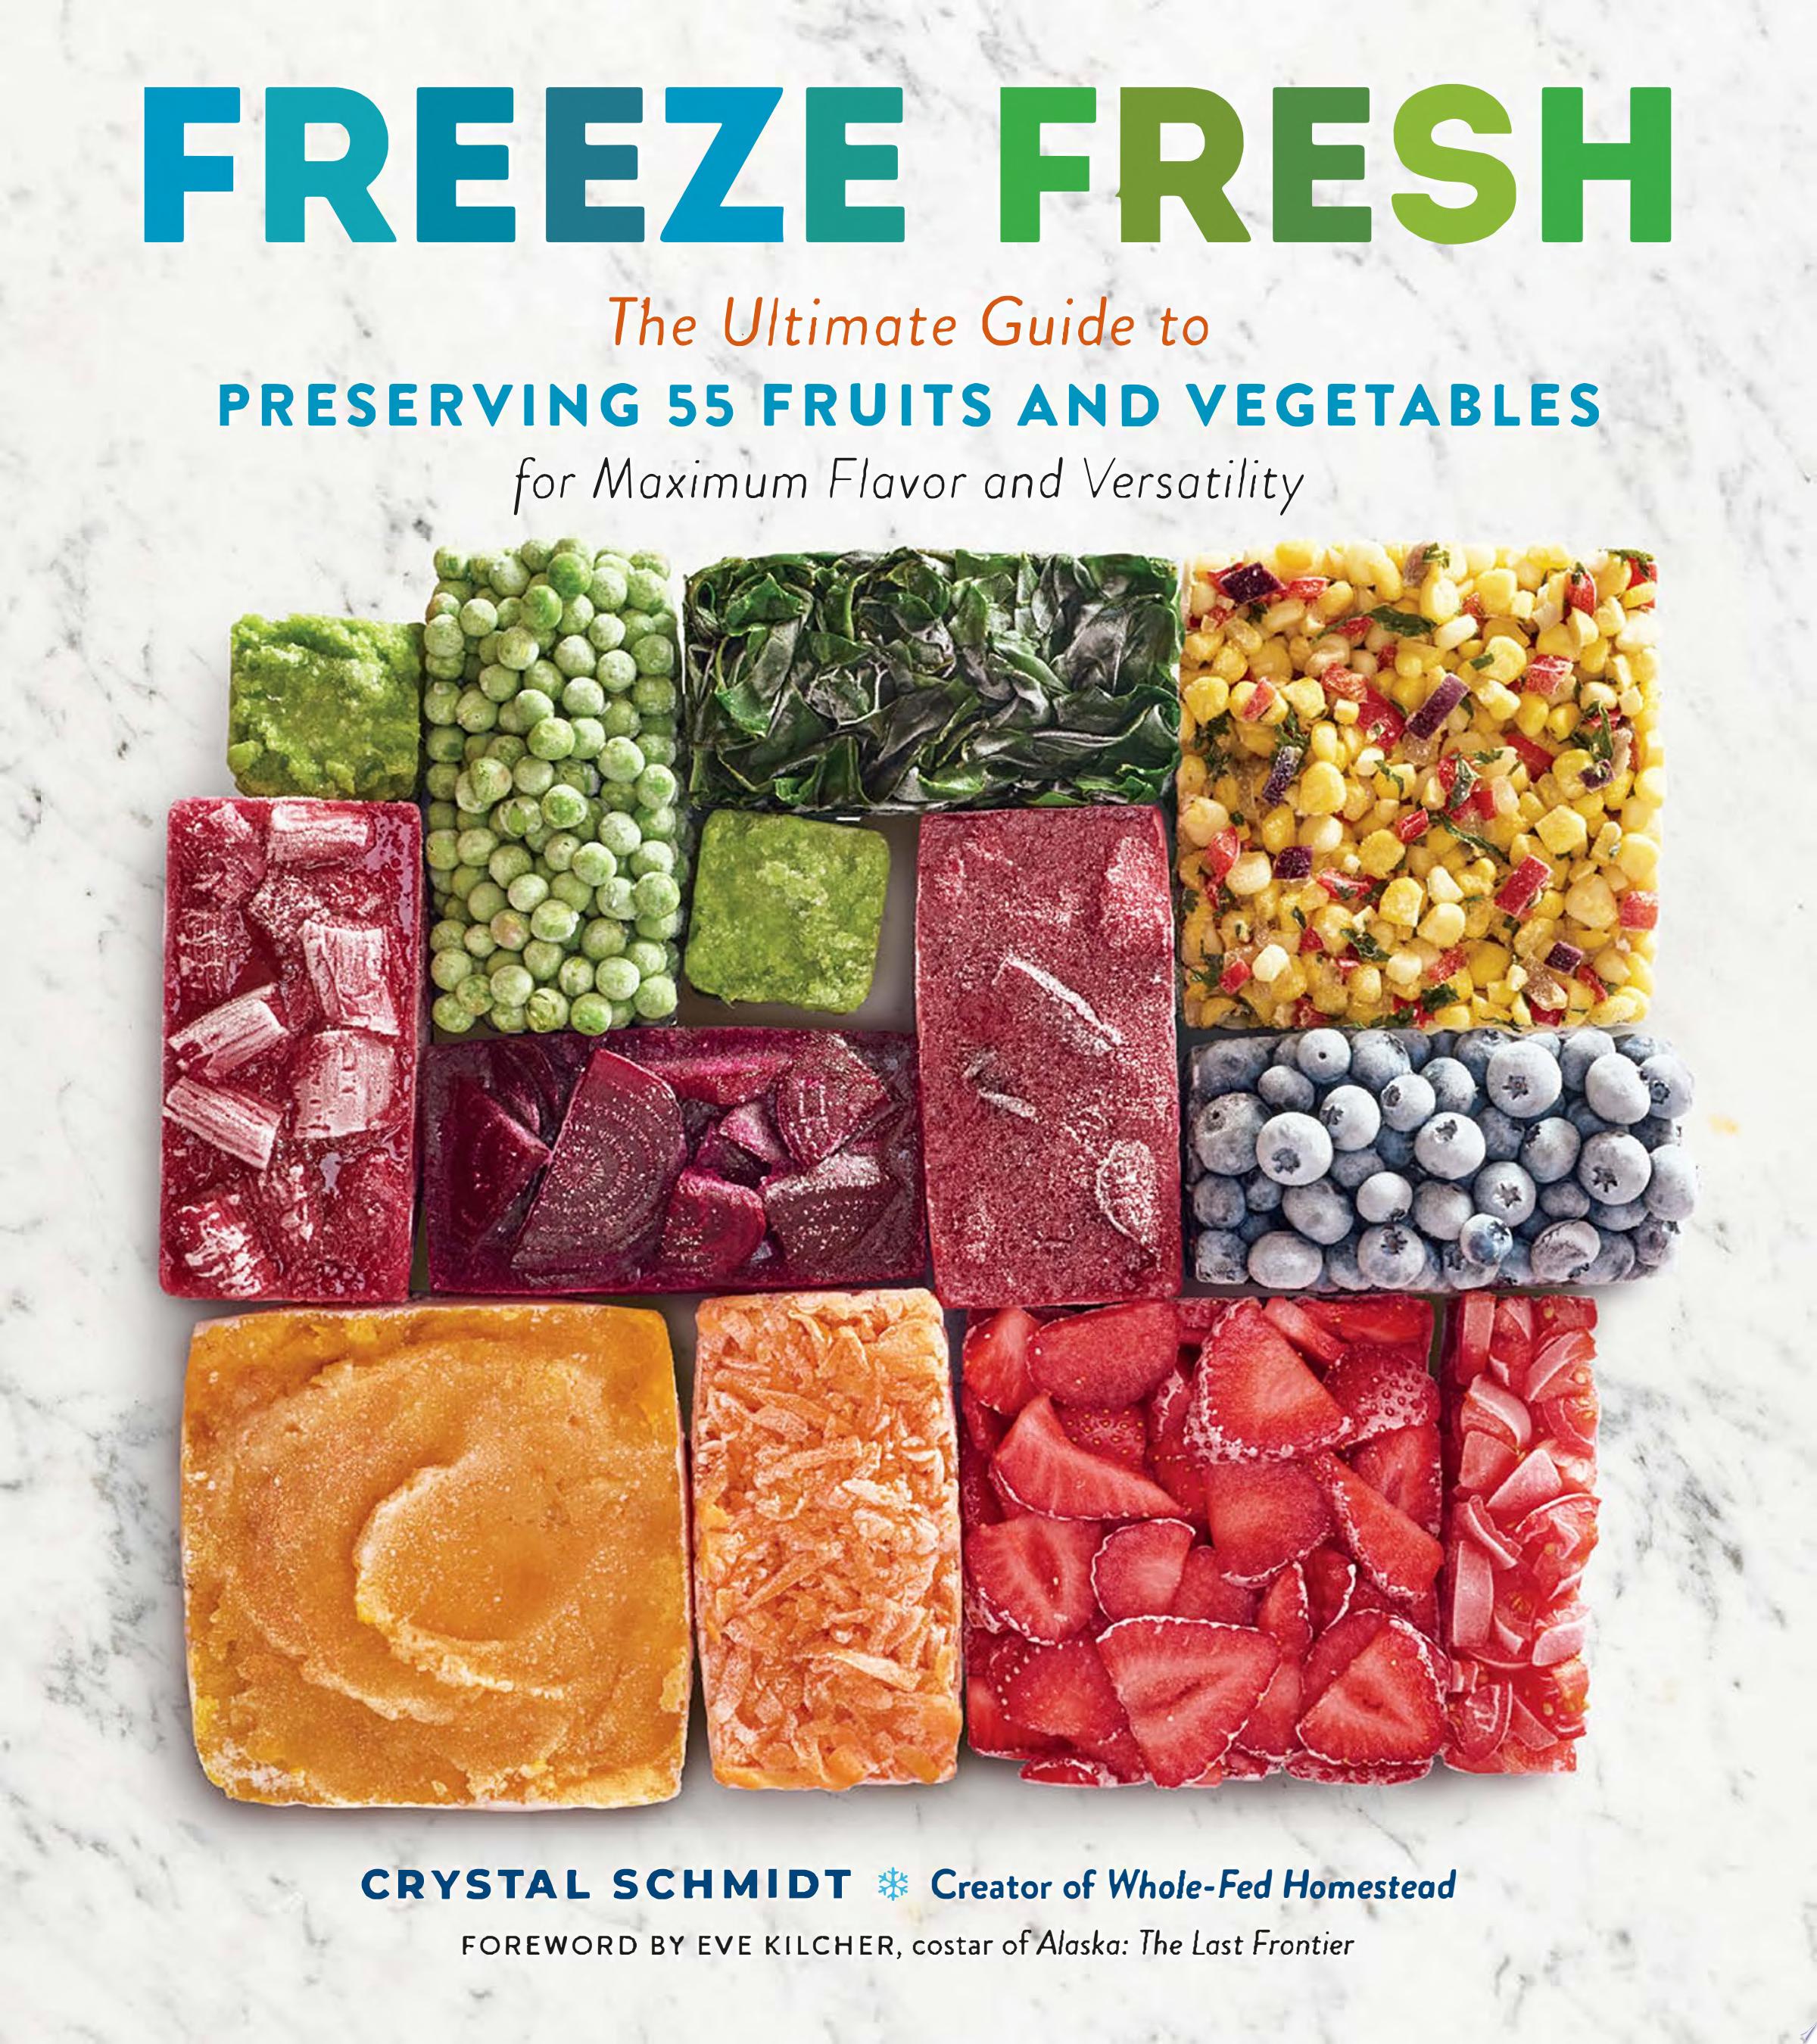 Image for "Freeze Fresh"